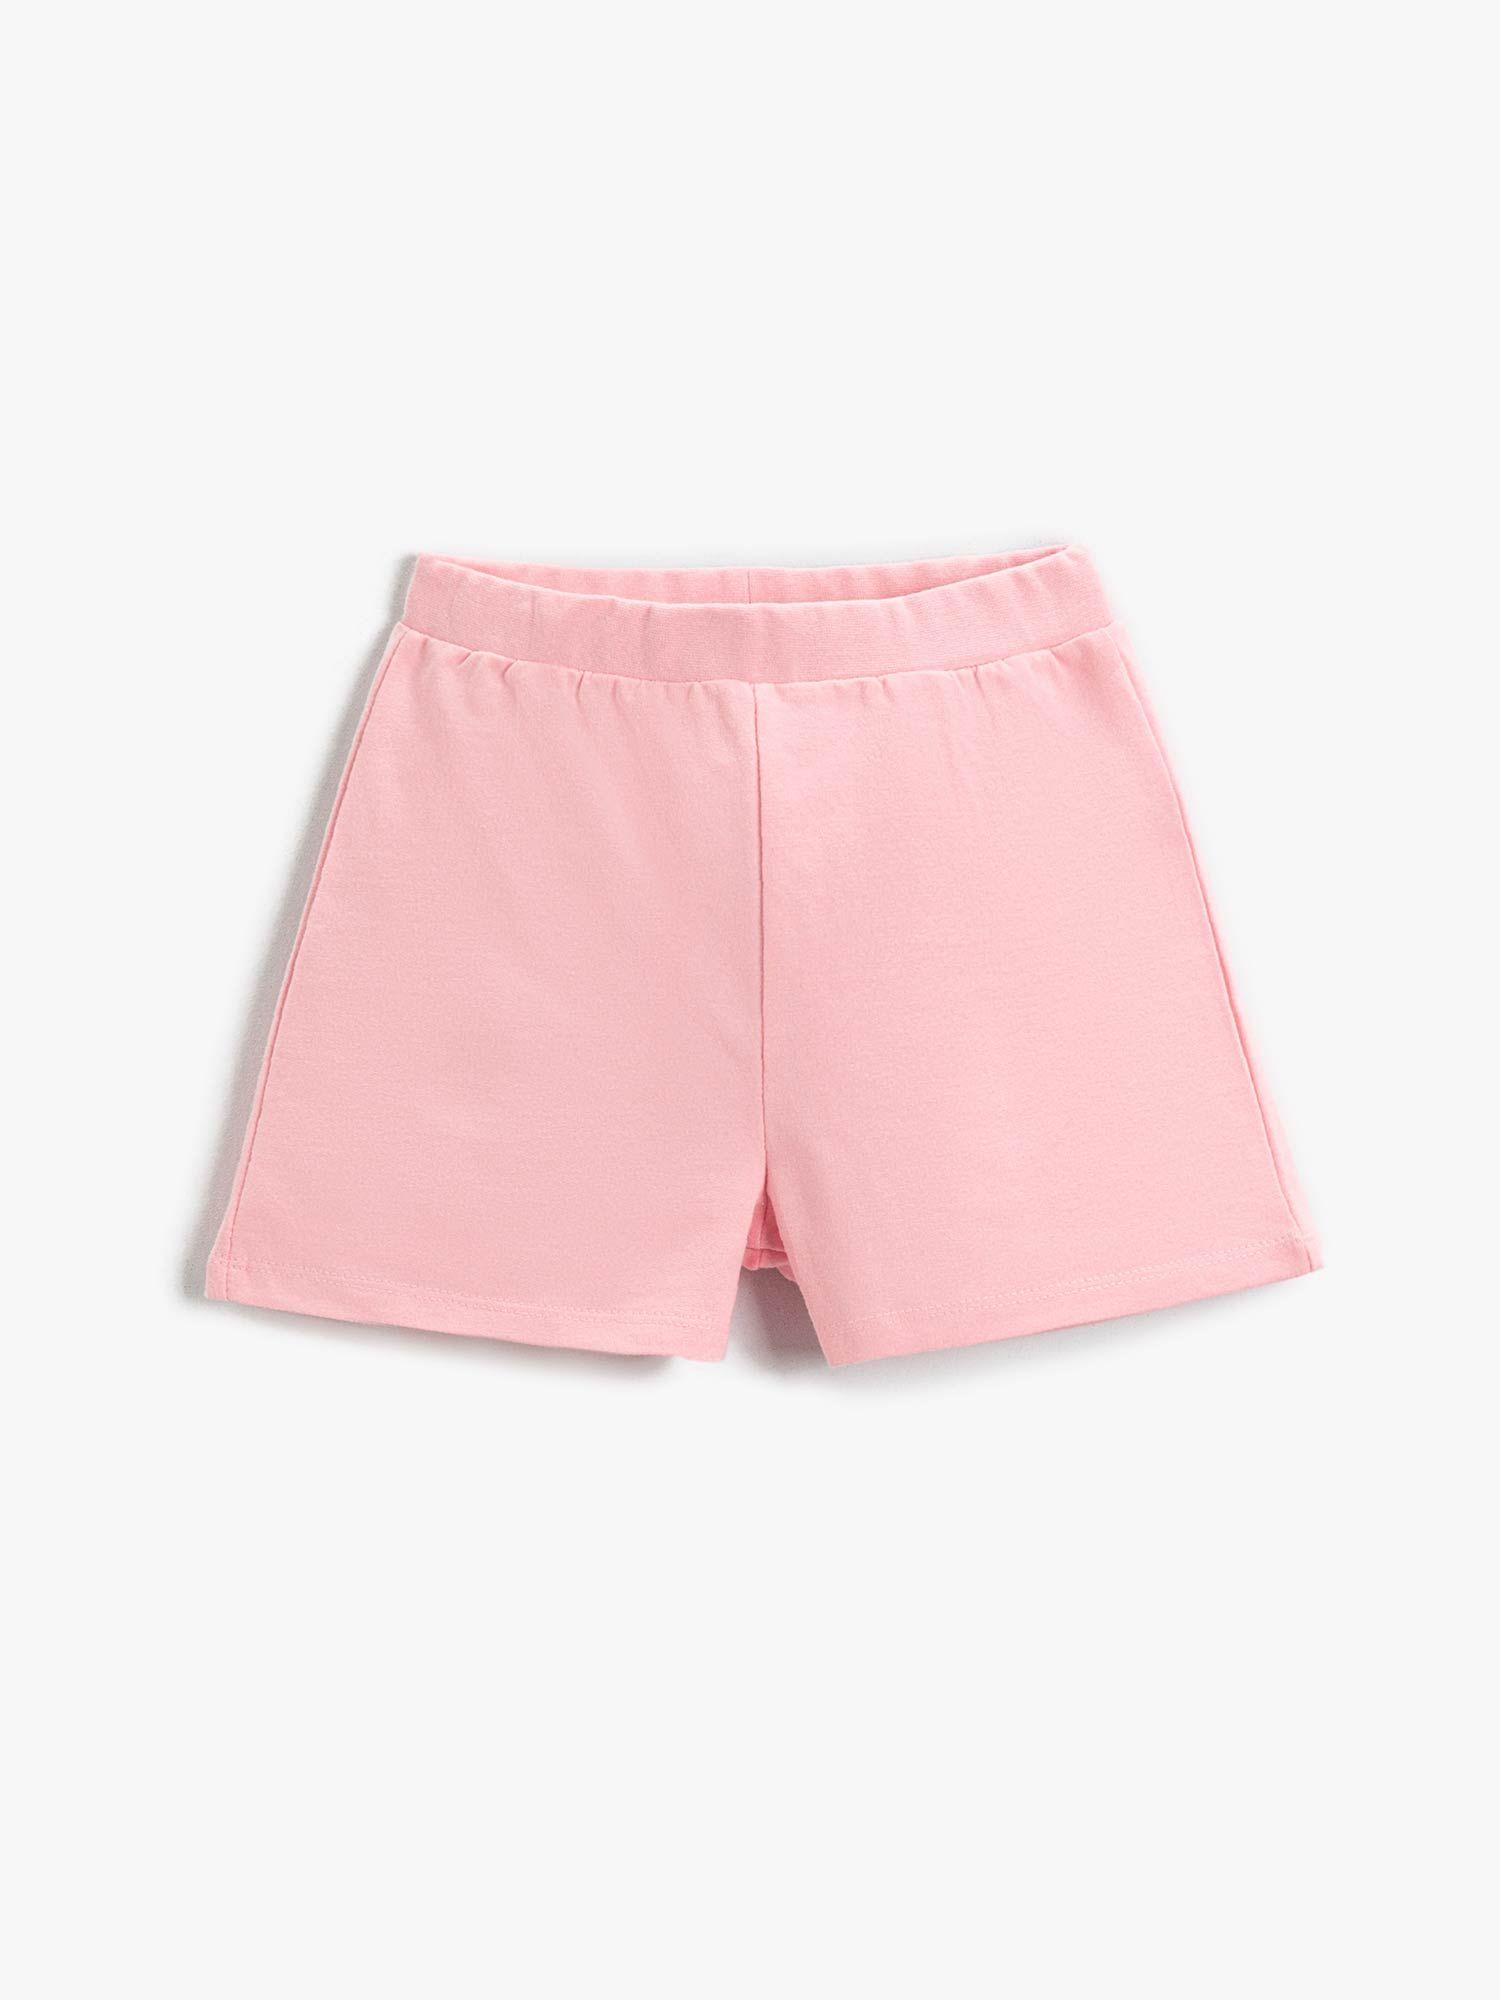 girls pink bottoms